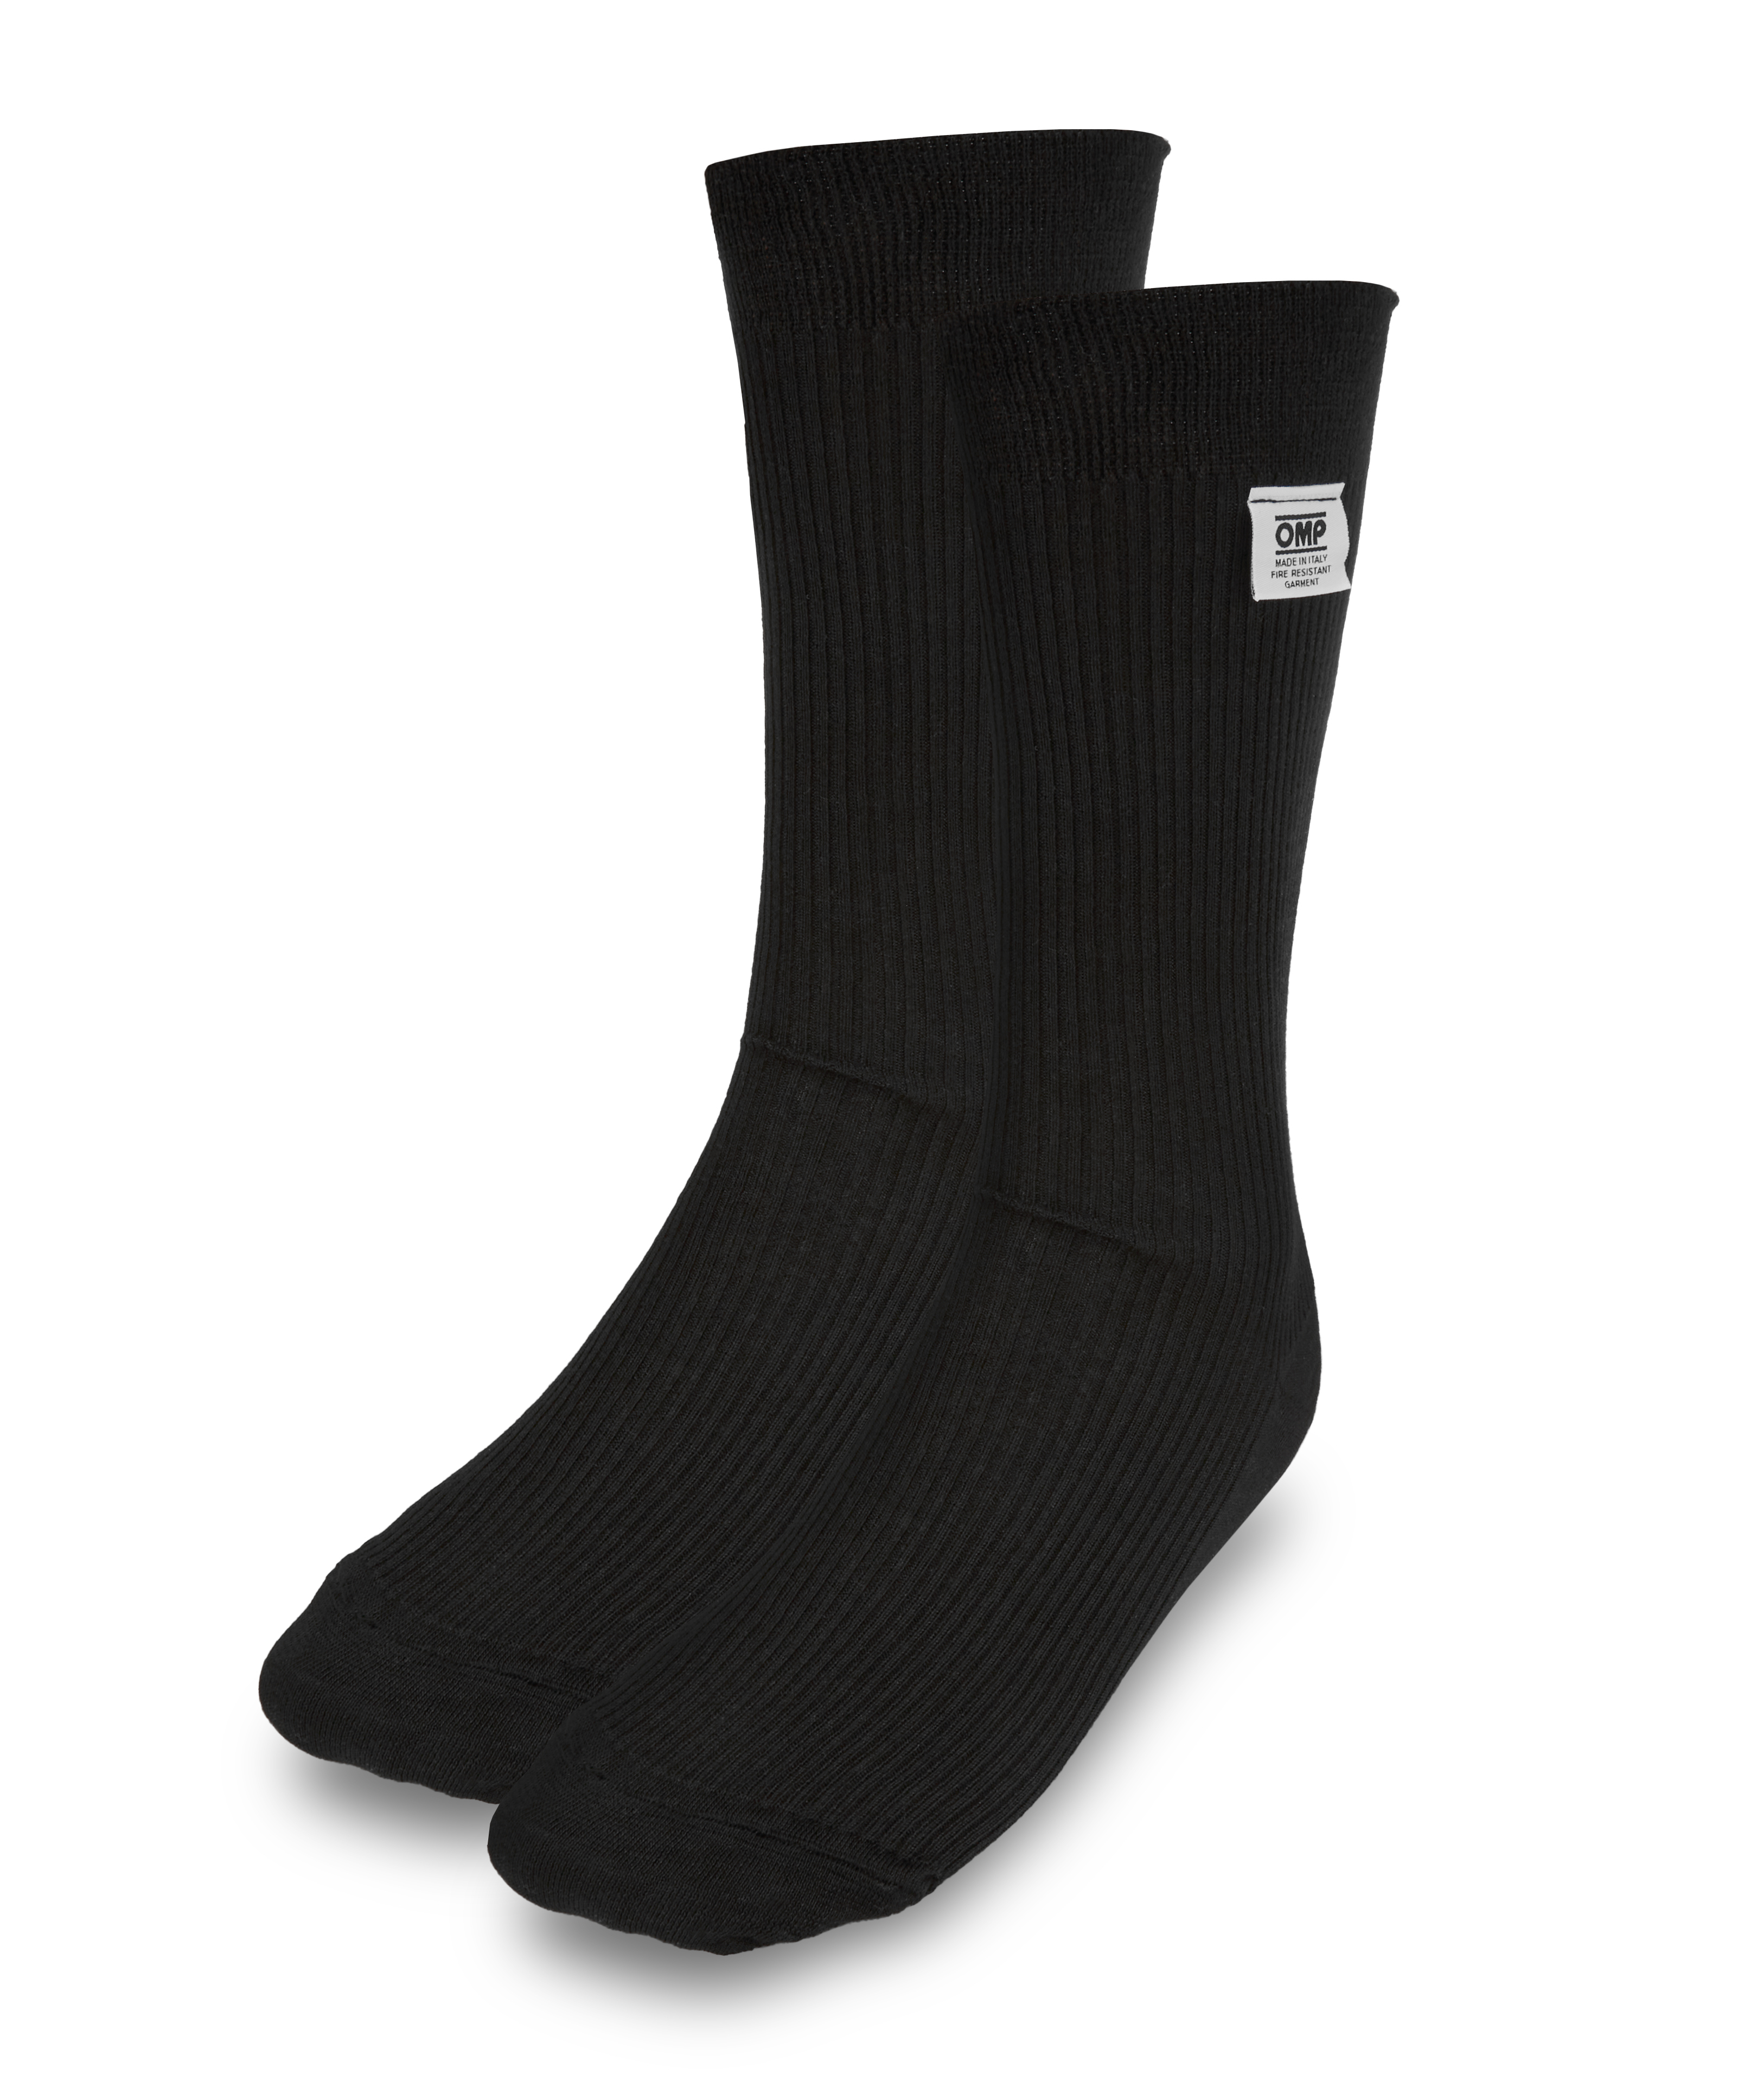 Racing Socks Black Nomex Size Small FIA - IE0-0762-A01-071-S